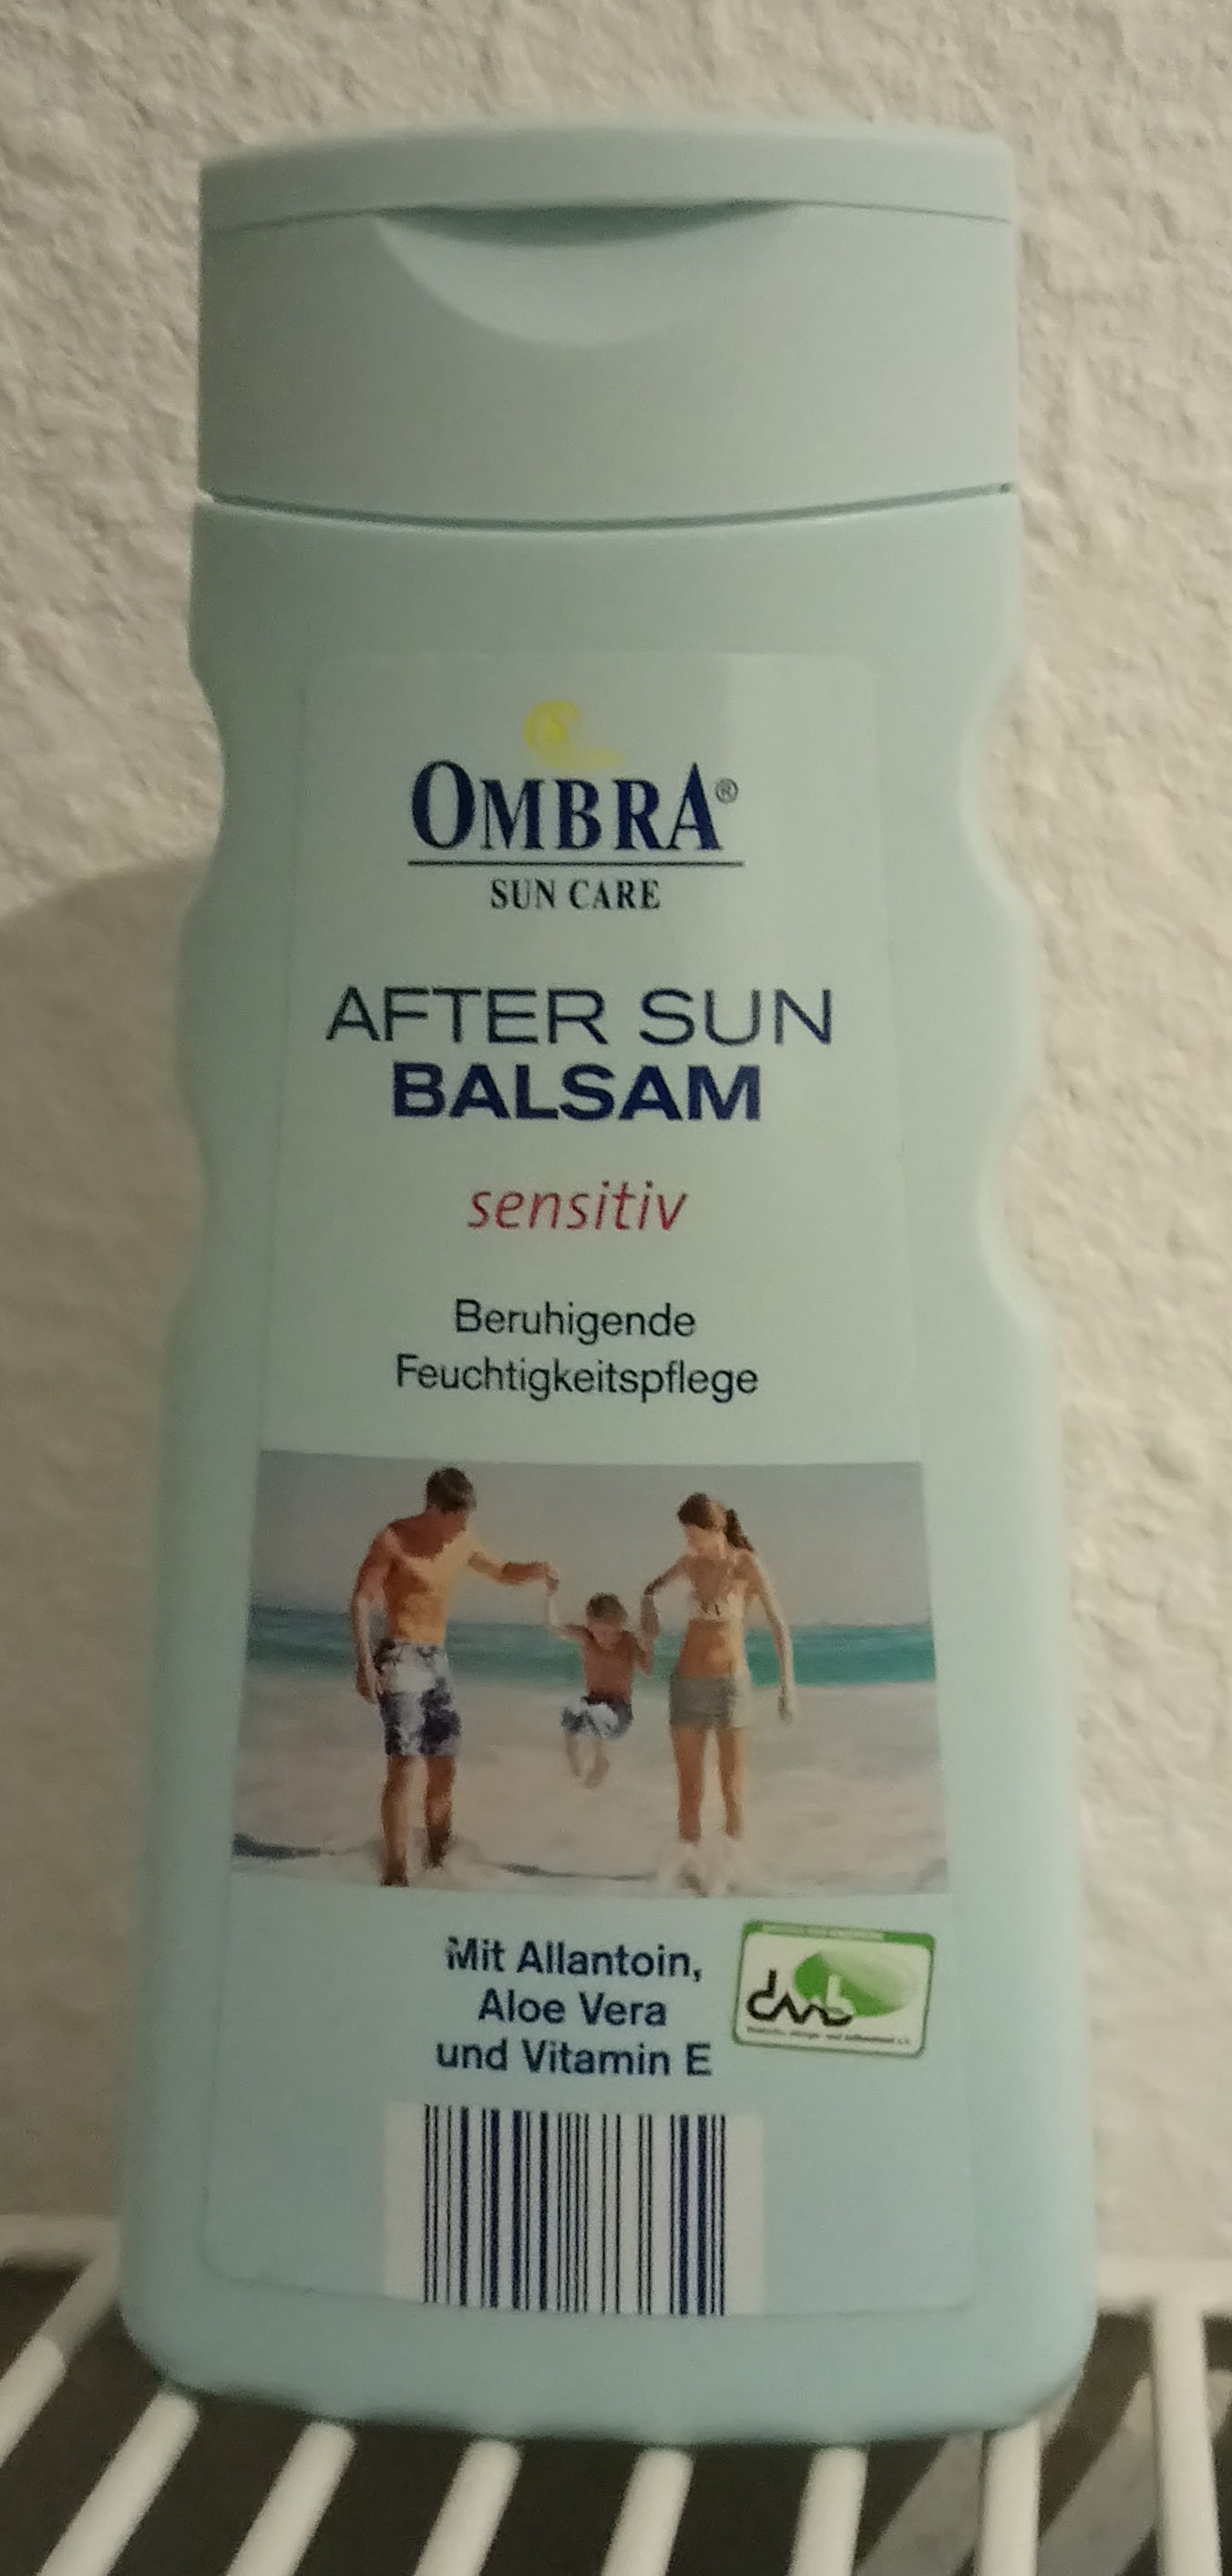 After Sun Balsam - Product - de